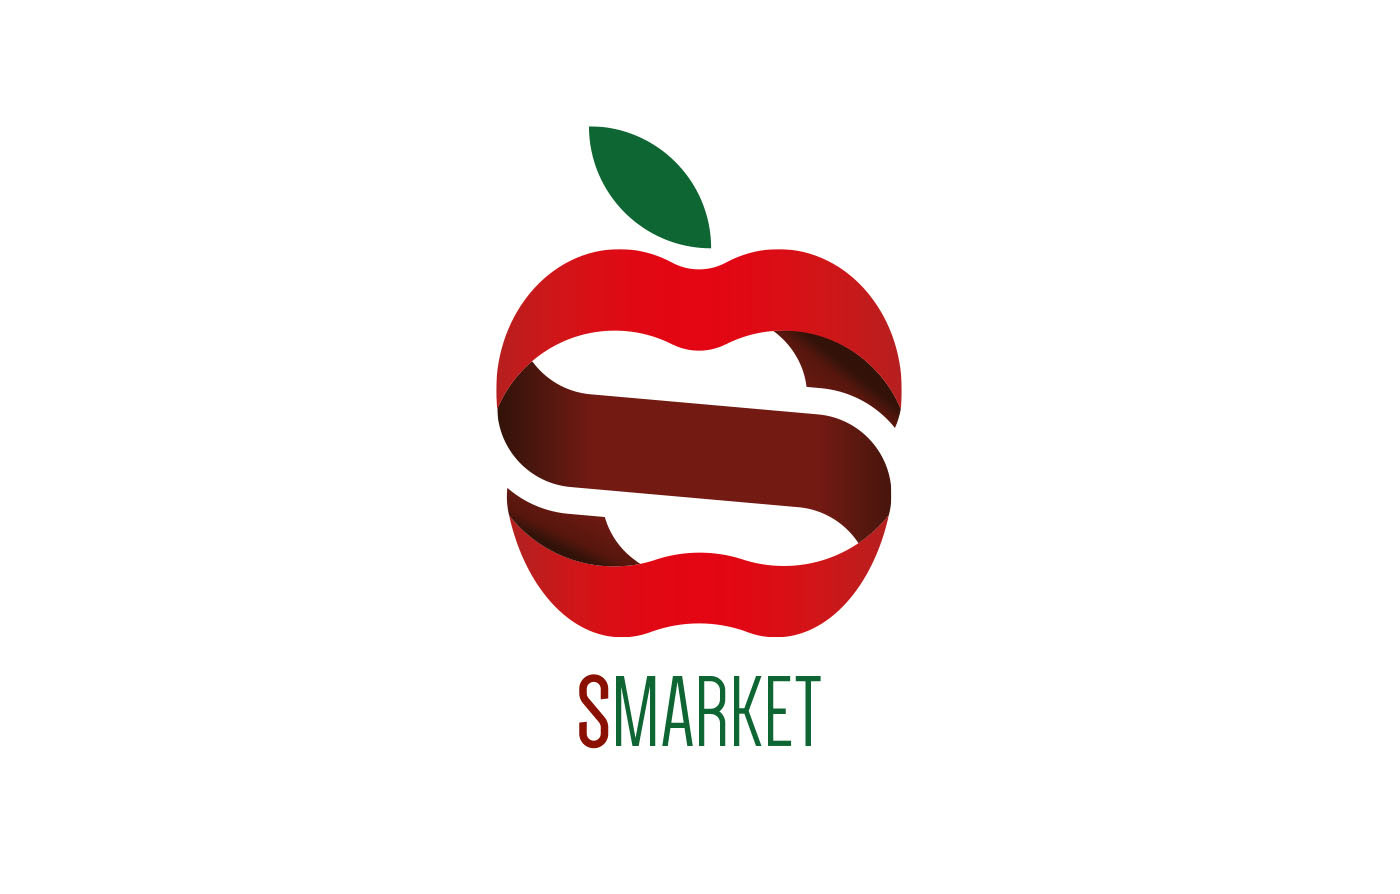 logo Logotipo Logotype imagotipo imagotype Identidad Corporativa identité corporate Corporate Identity marca Mercado market marche